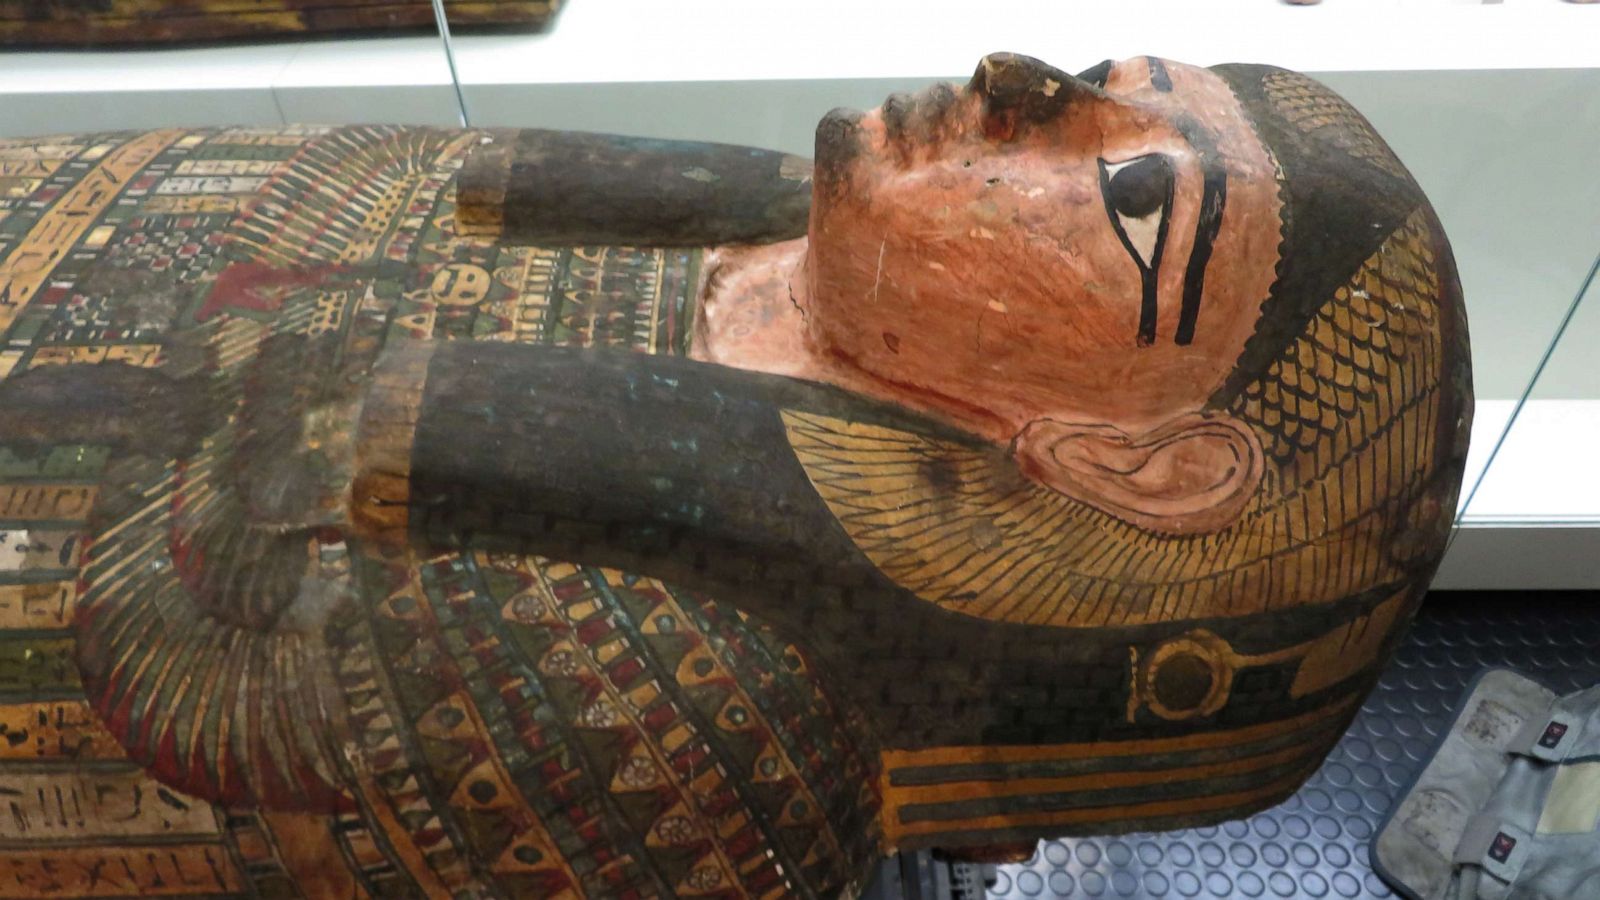 egyptian mummy case designs